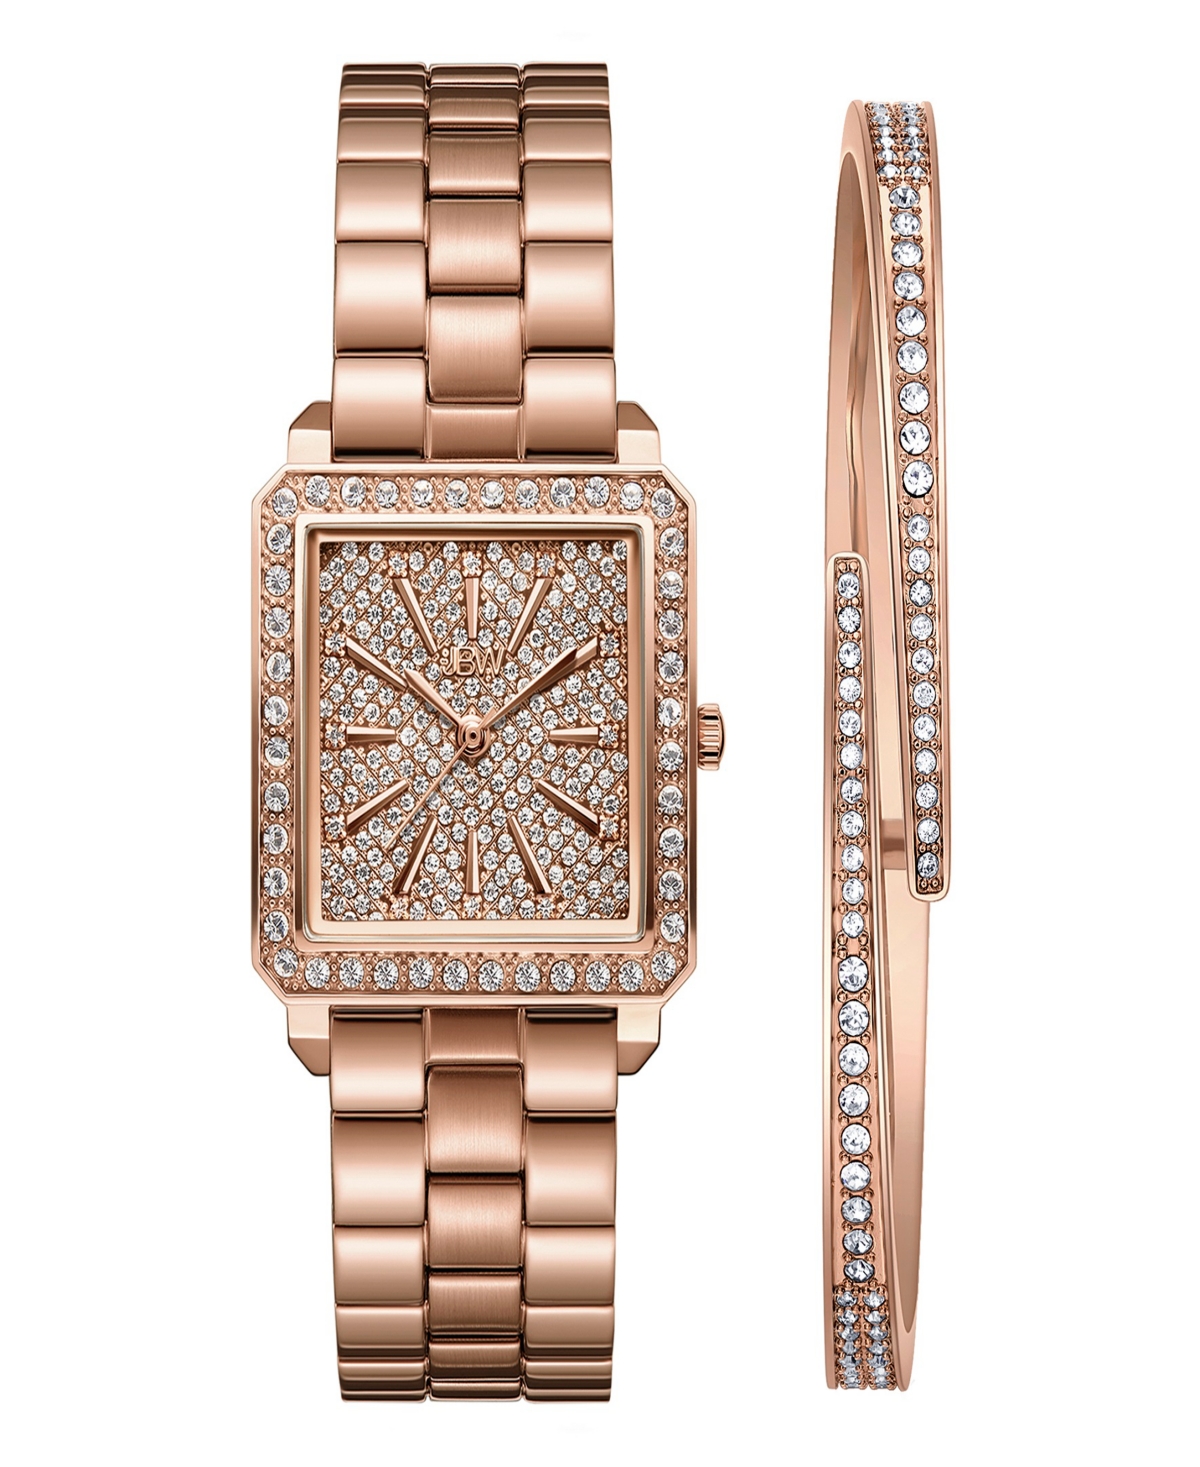 Women's Cristal Quartz 18K Rose Gold-Plated Stainless Steel Watch Set, 28mm - Rose Gold